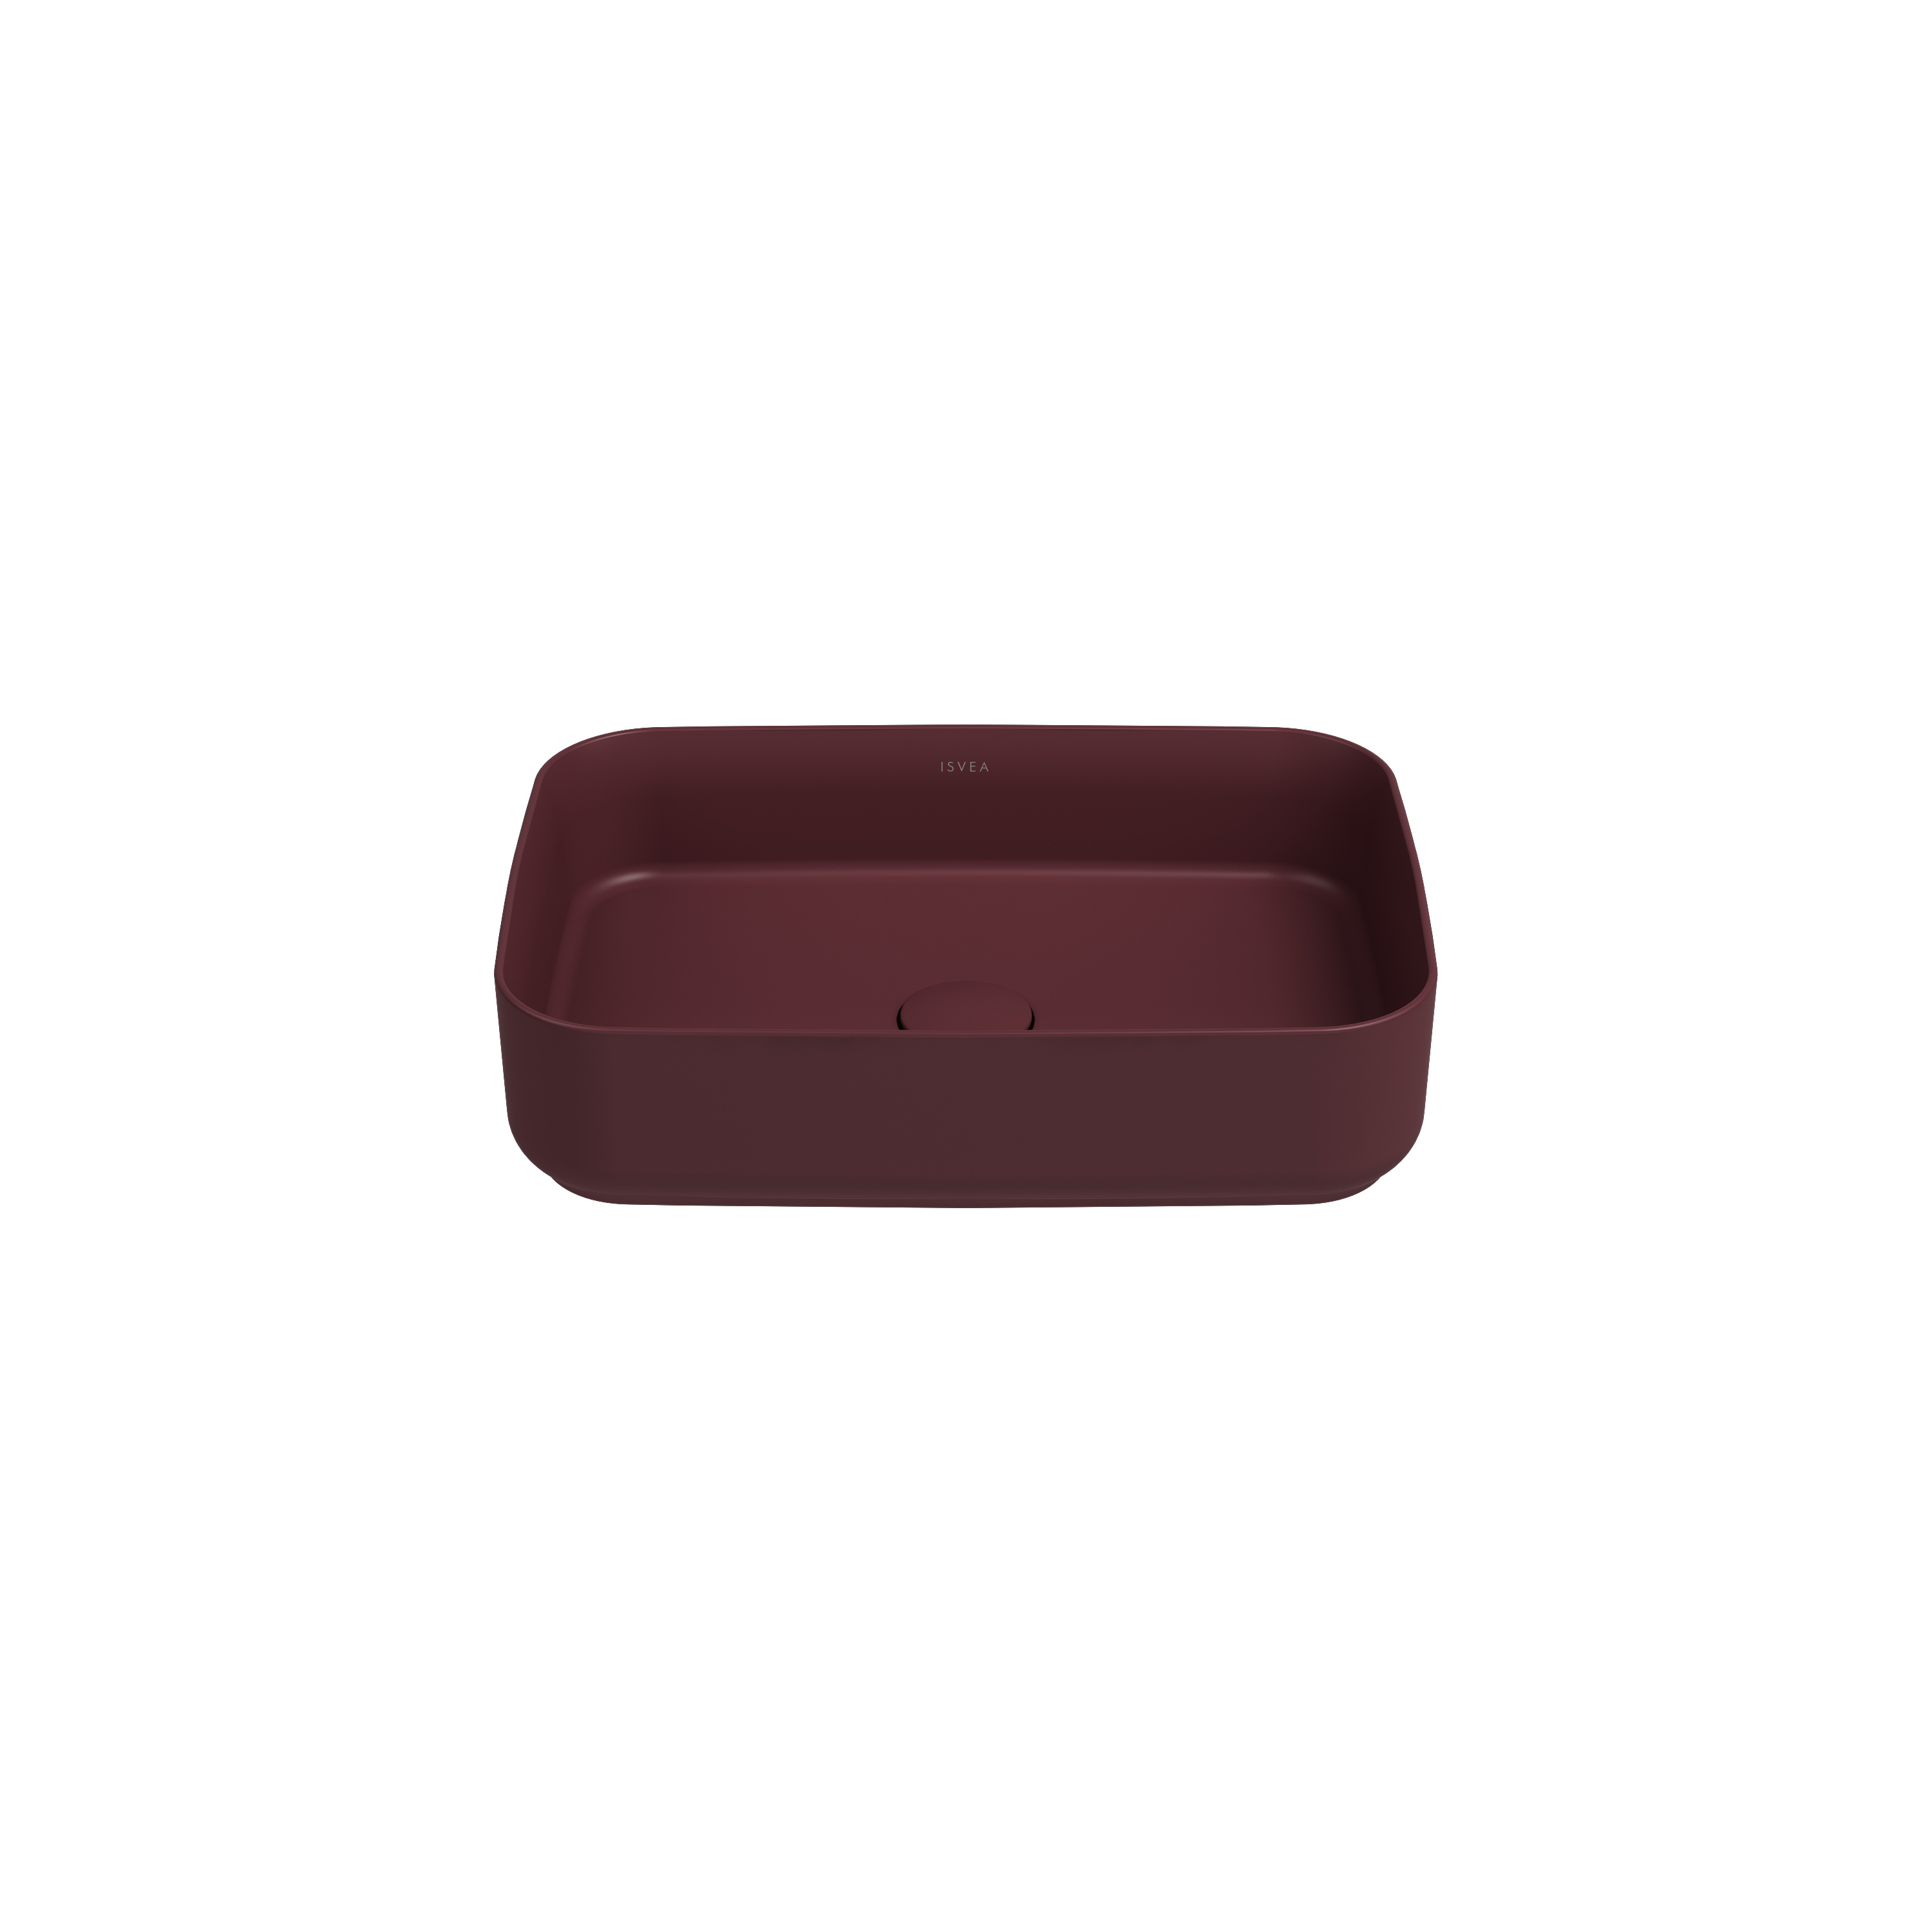 Infinity Countertop Washbasin 50 cm Maroon Red